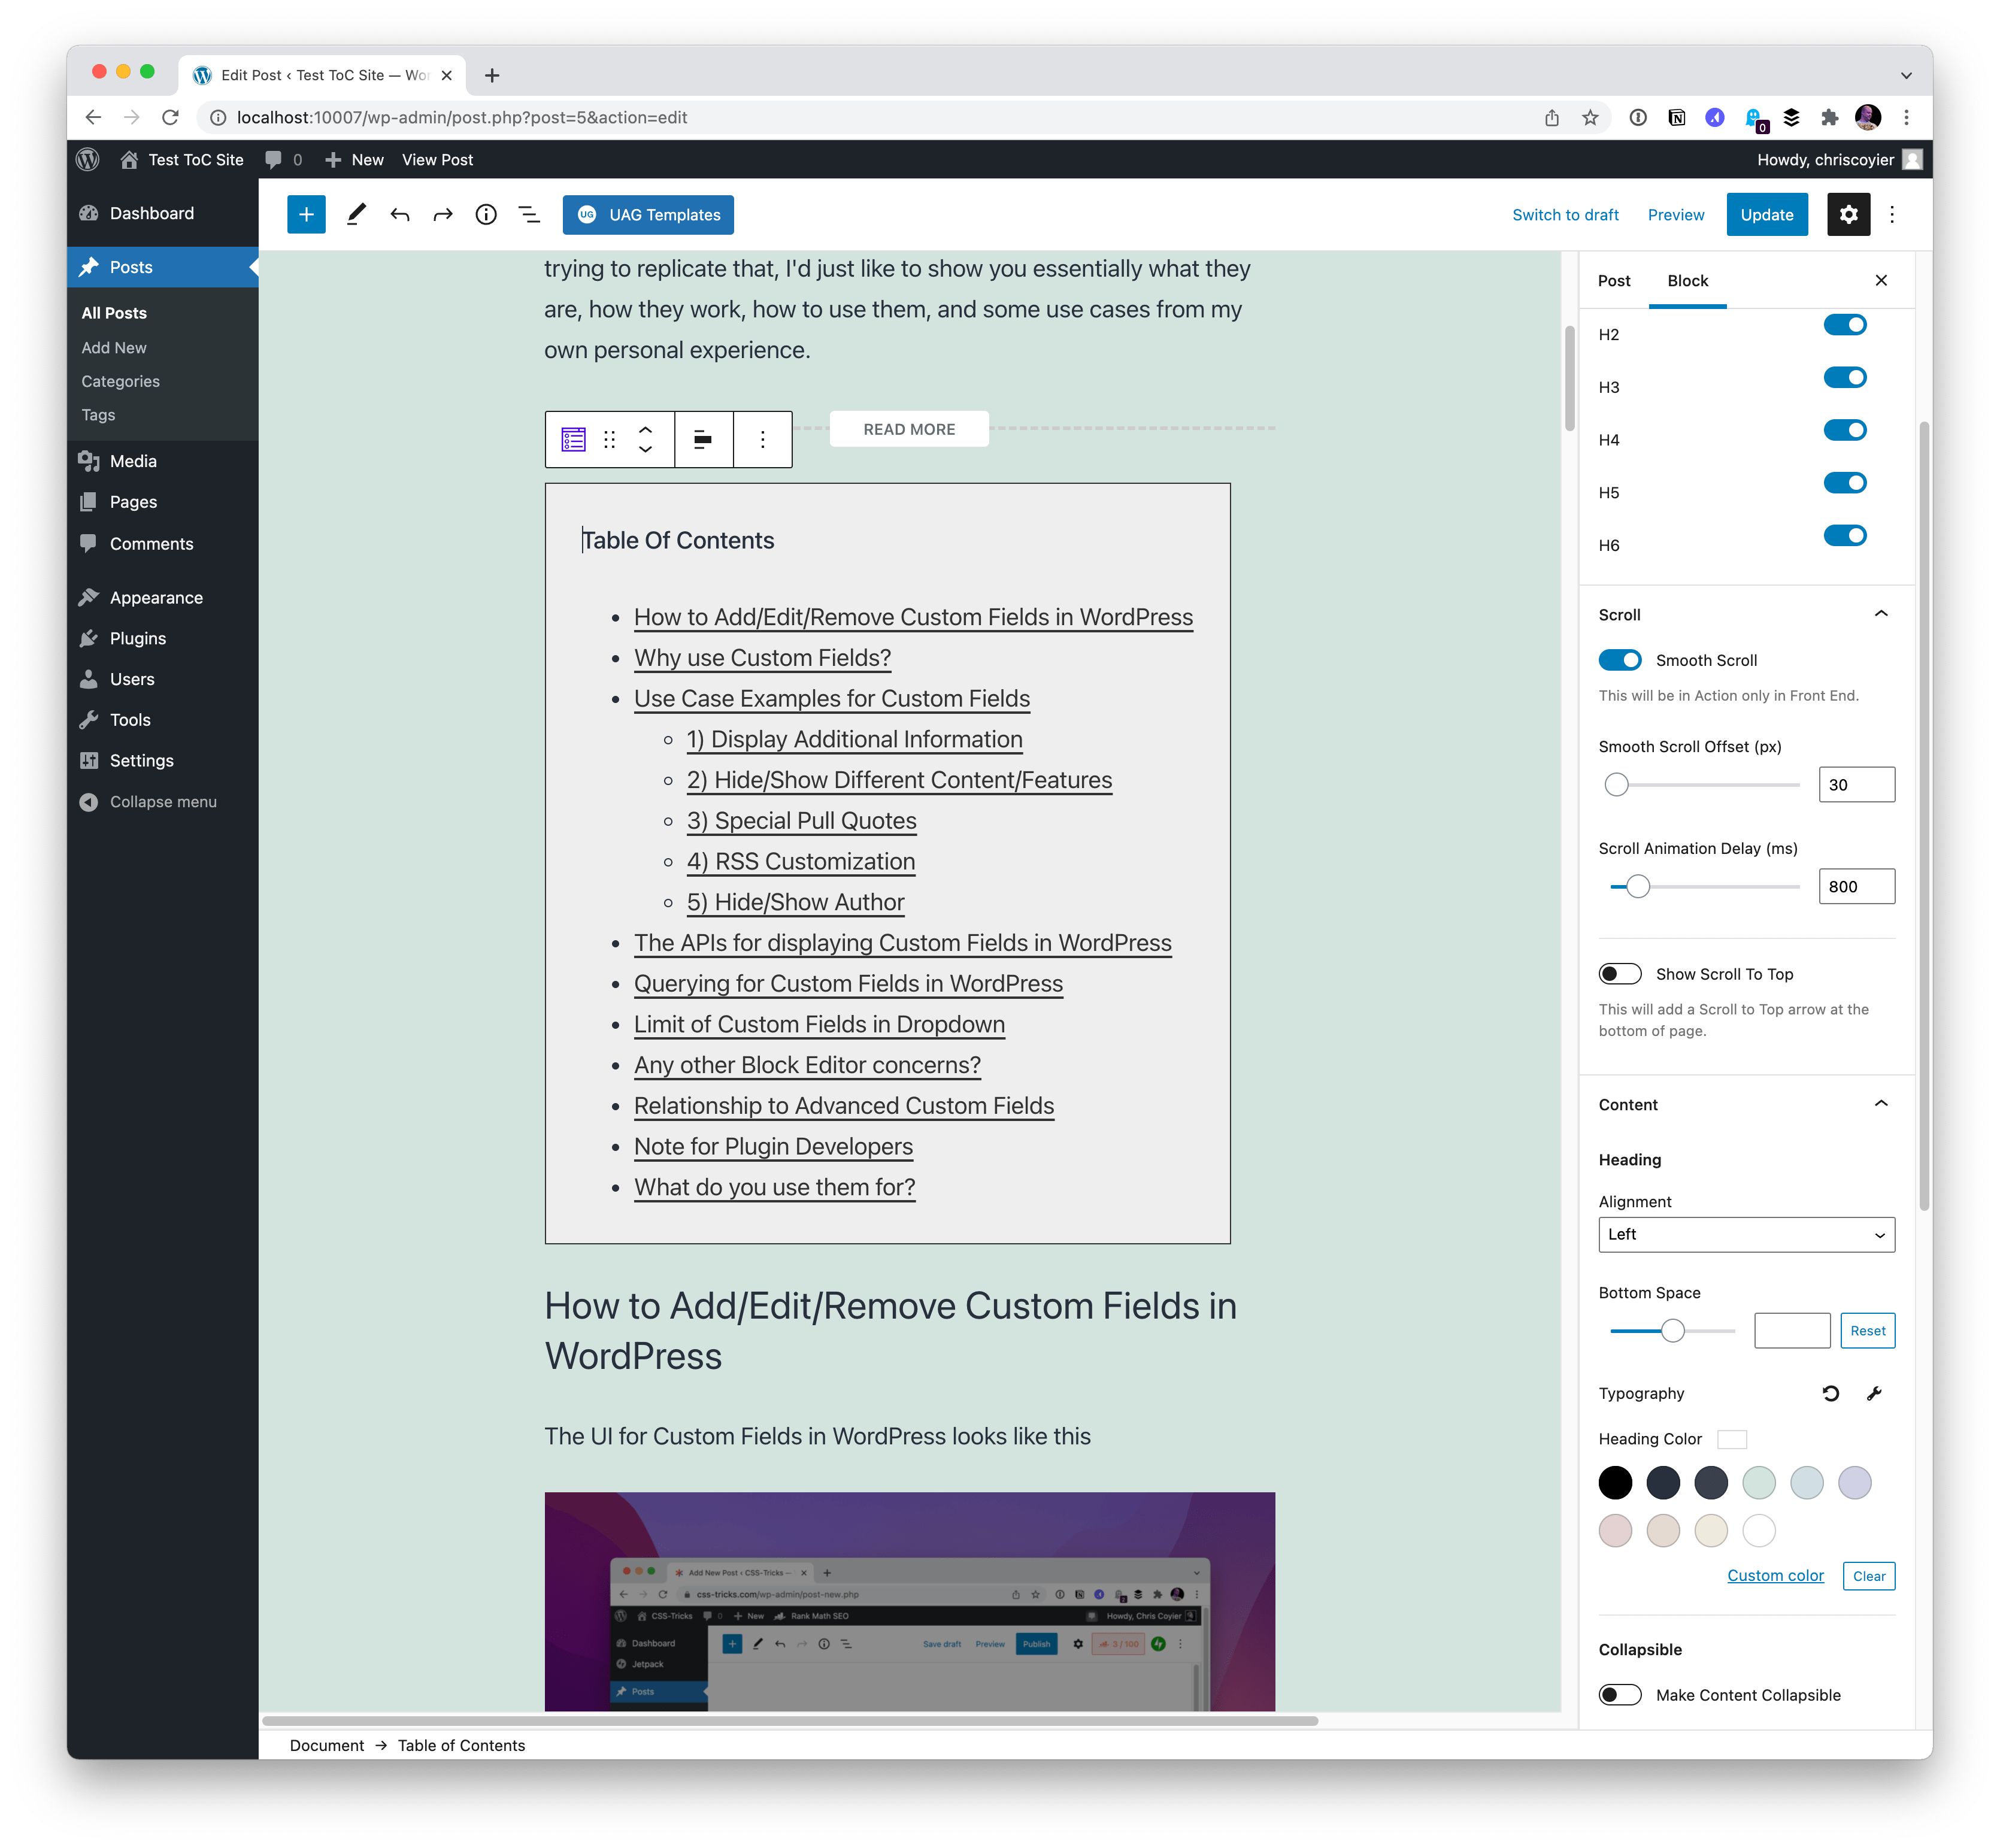 Screenshot of the Ultimate Addons for Gutenberg Tablew of Contents plugin in WordPress.